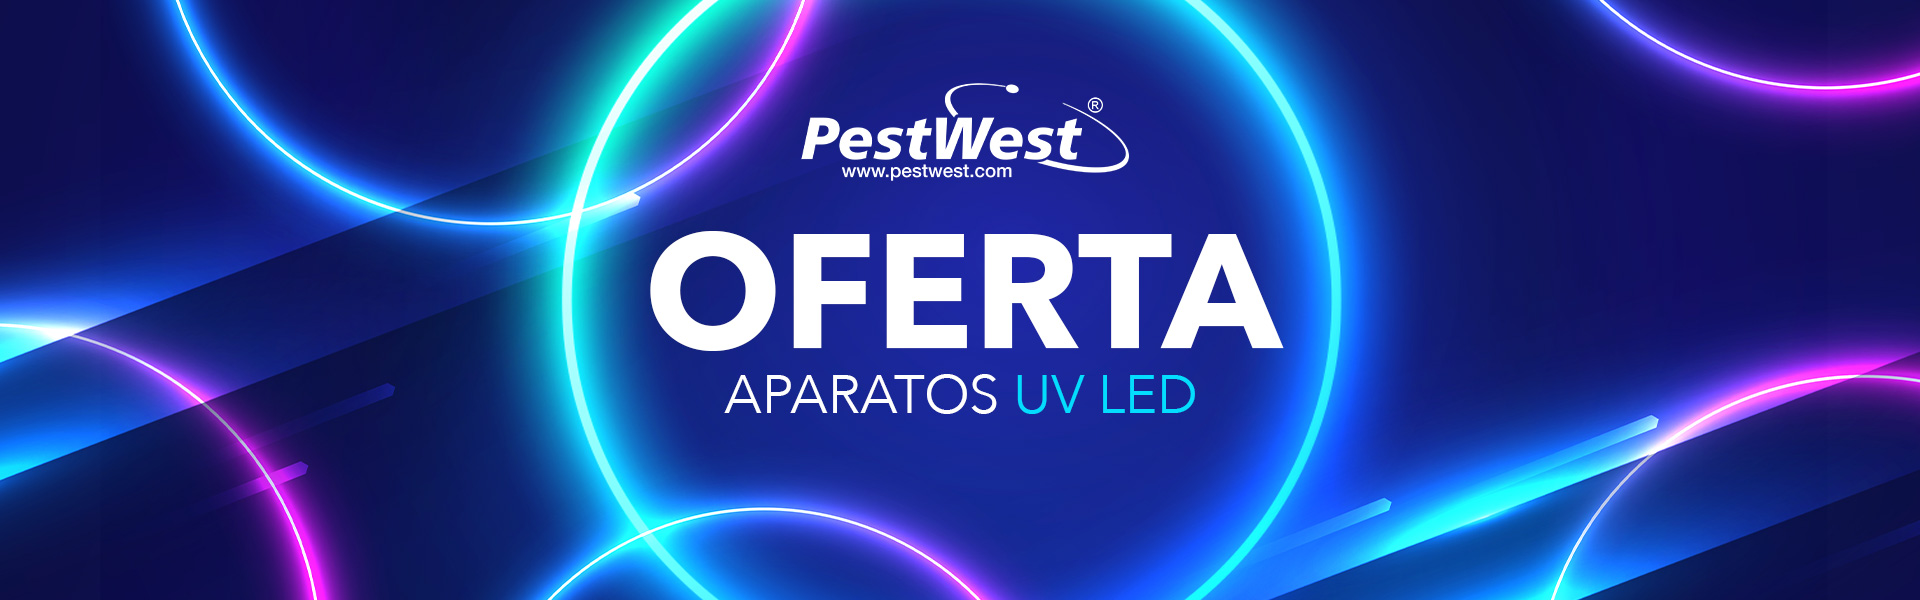 Oferta Aparatos UV LED